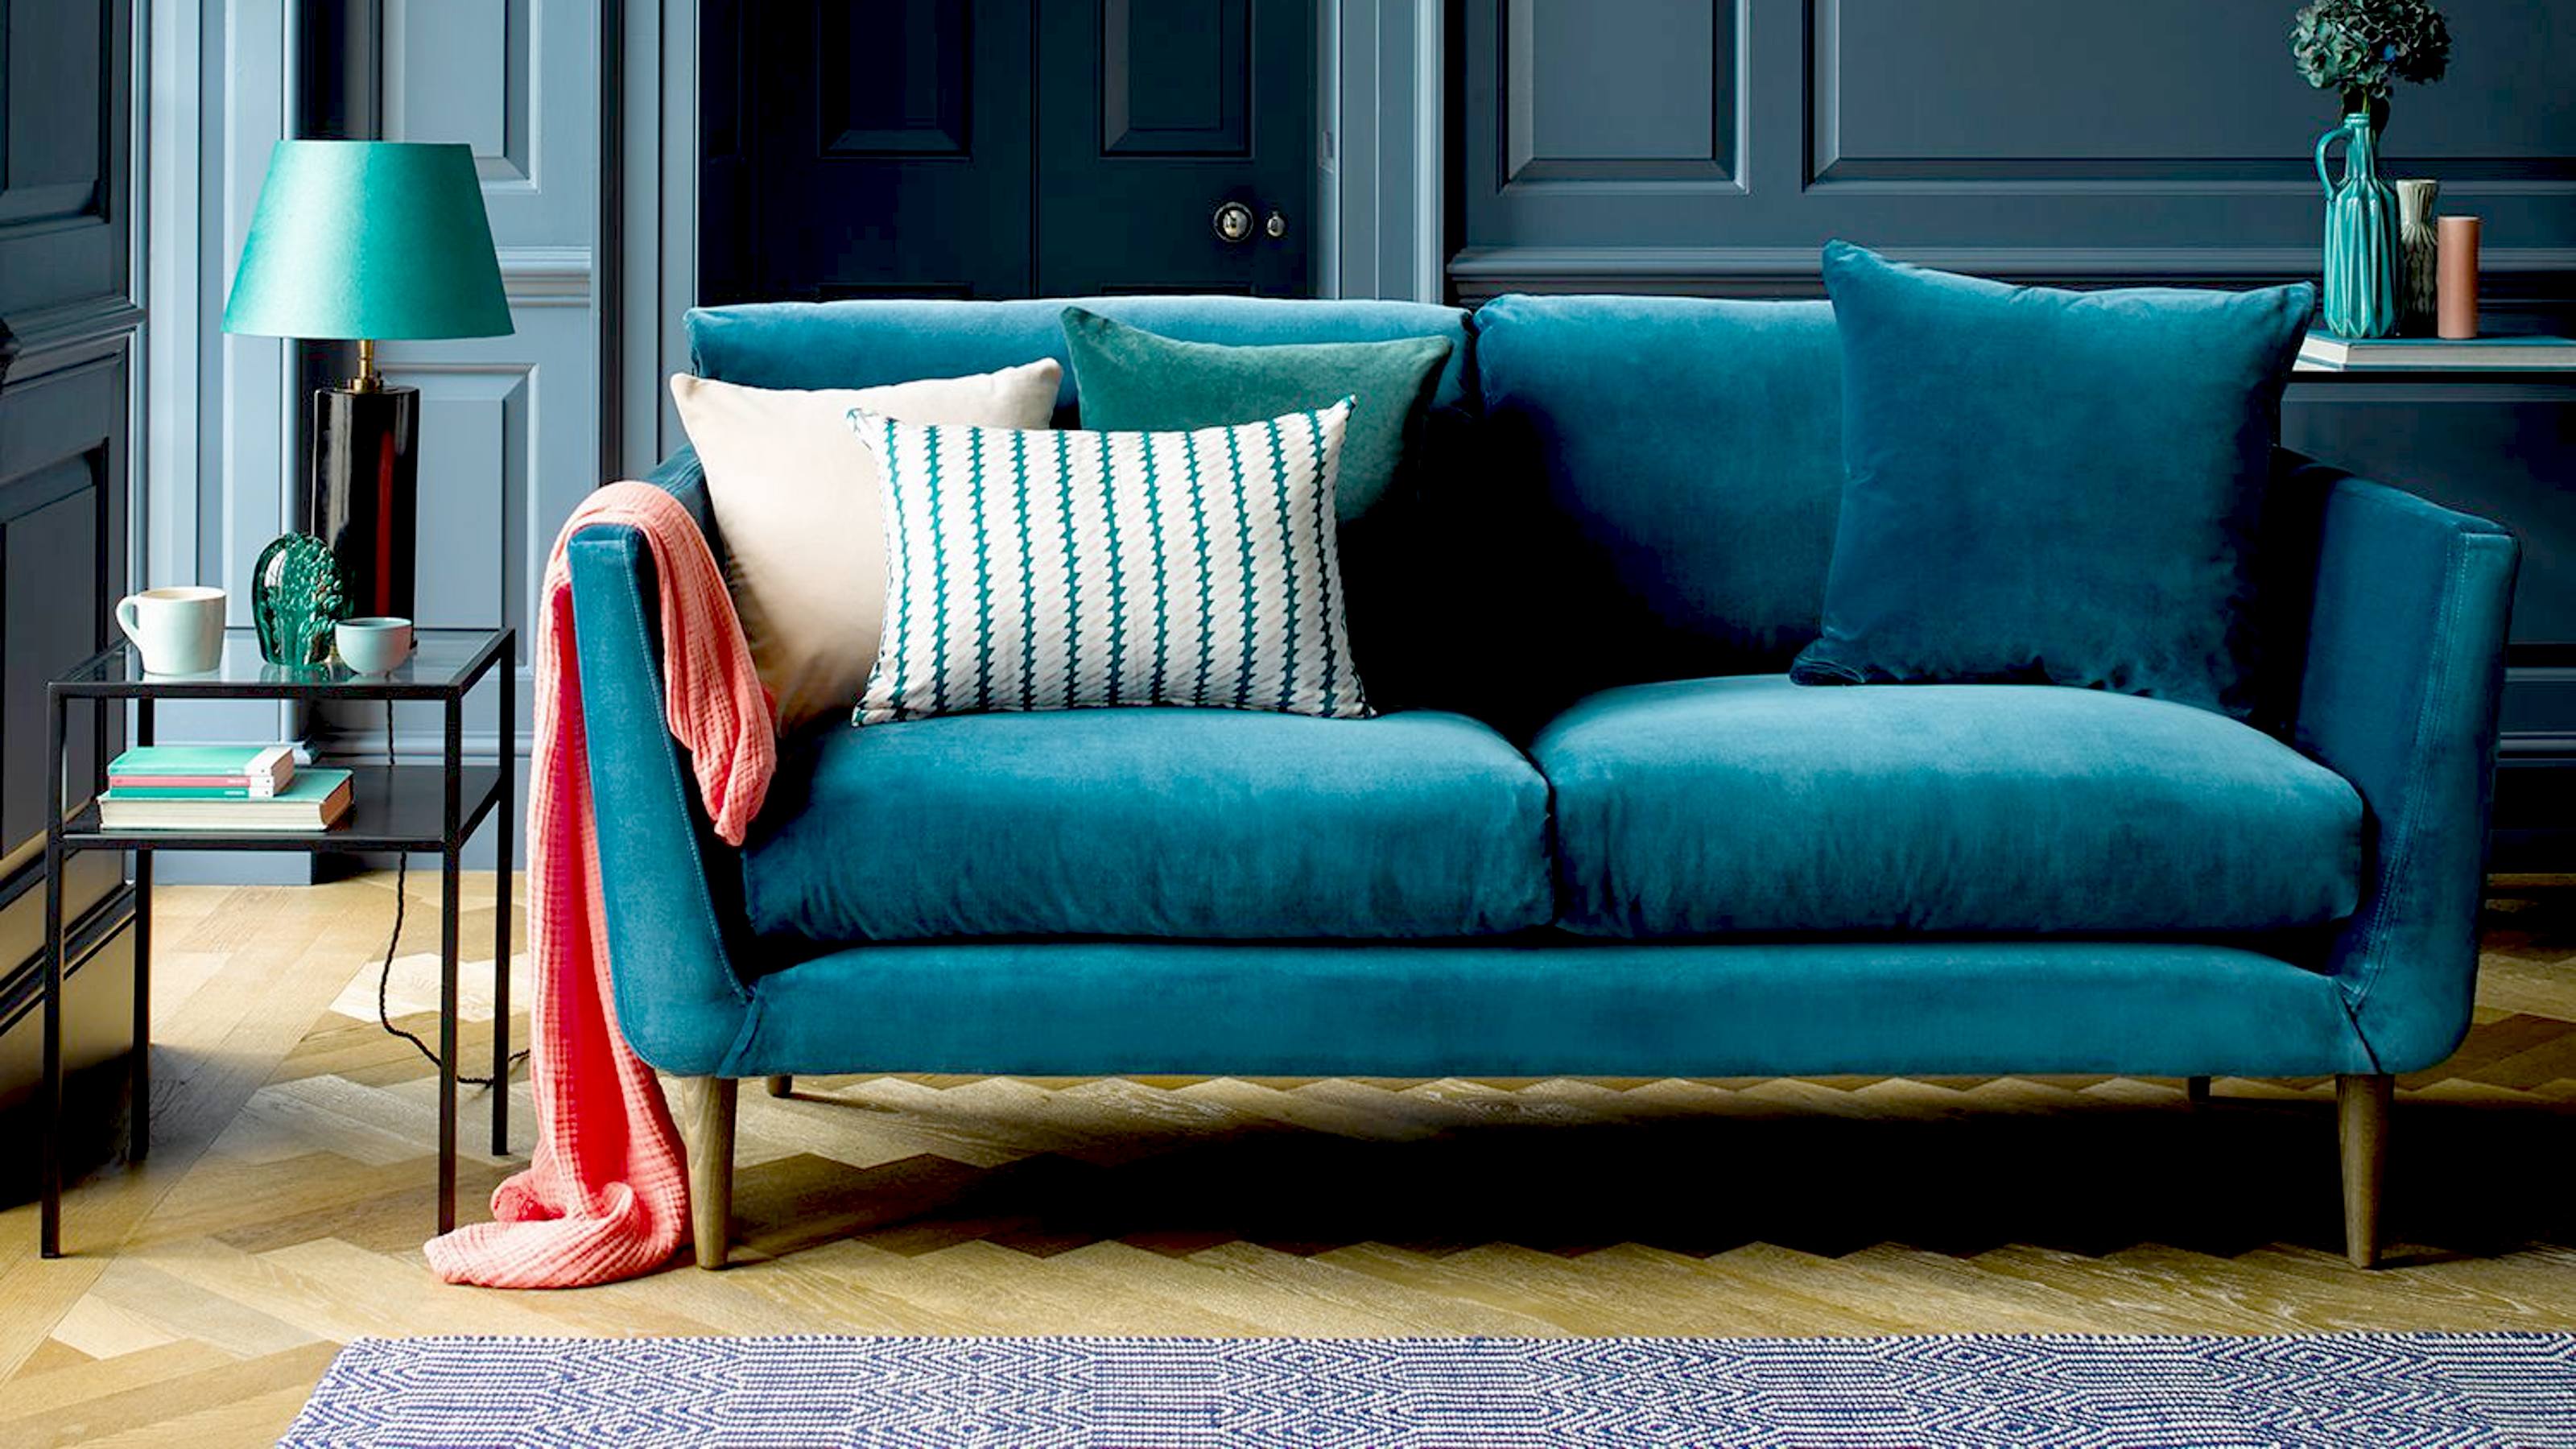 Best Sofas 2022 Comfortable Stylish, Are Sofa Com Sofas Any Good